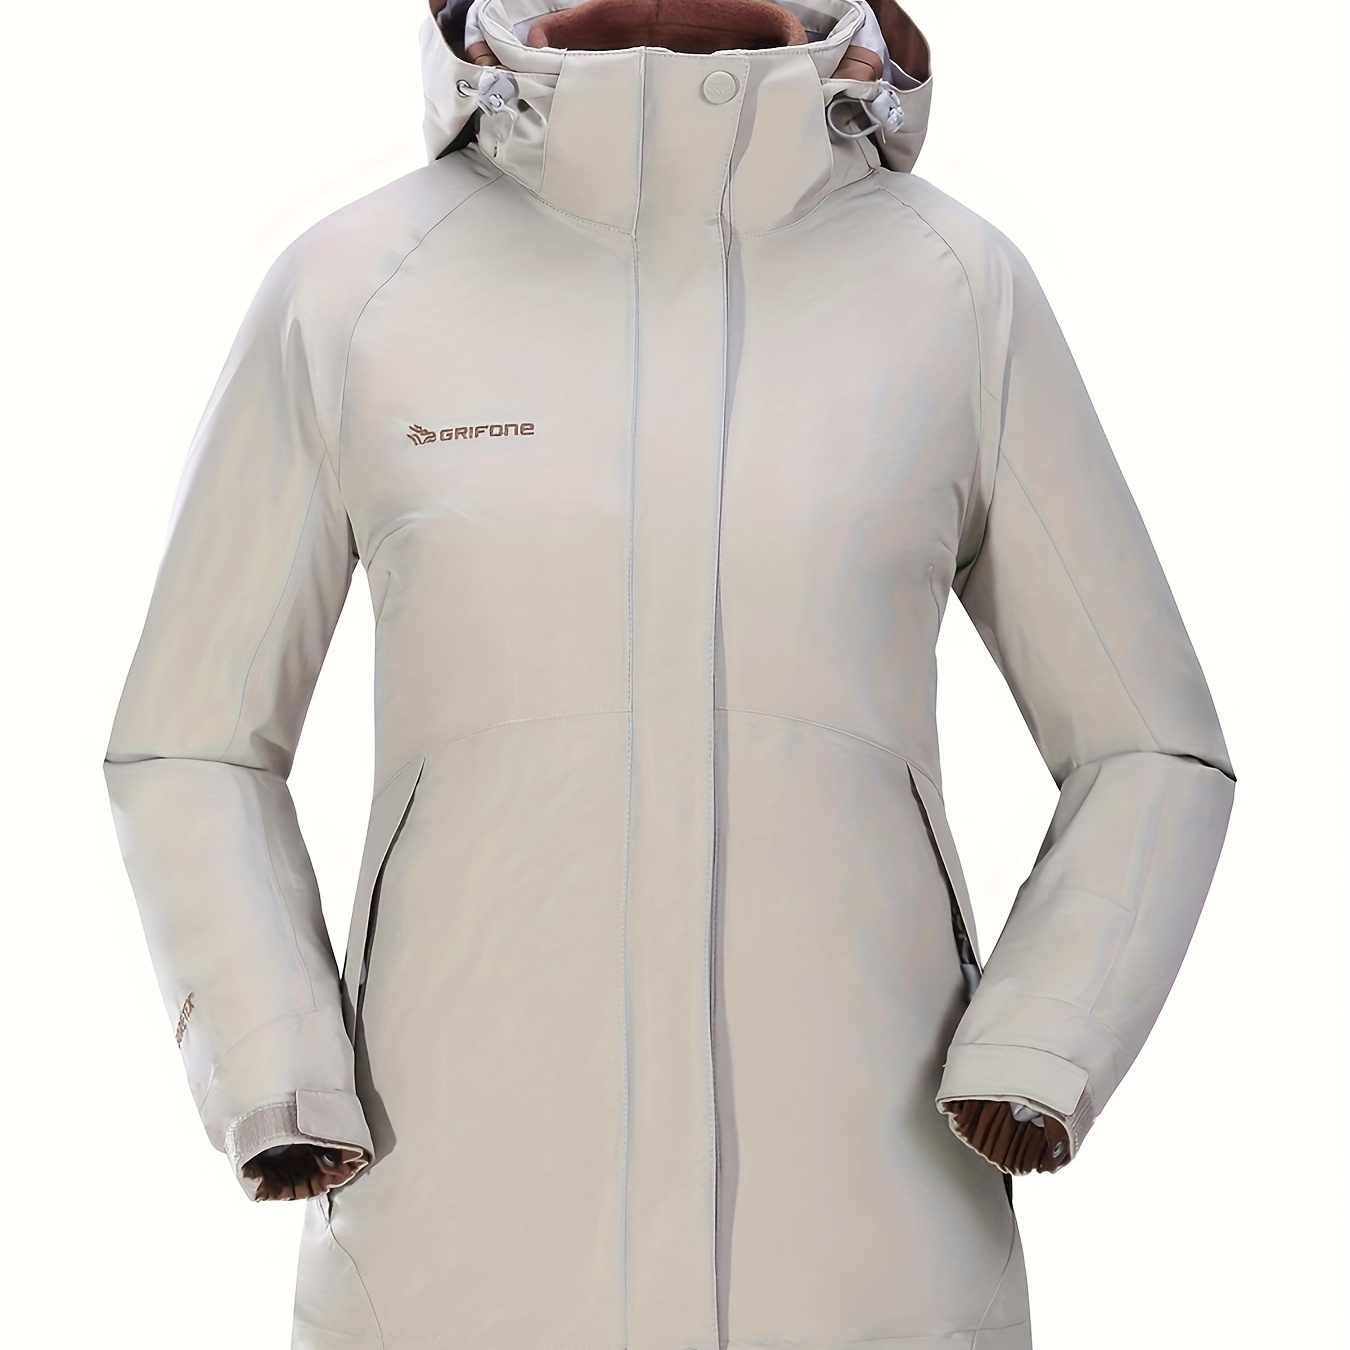 3-in-1 Outdoor Ski Jacket, Windproof & Waterproof Fleece Lined Thermal  Hooded Jacket, Women's Winter Sports Jacket For Hiking Mountaineering  Snowboard